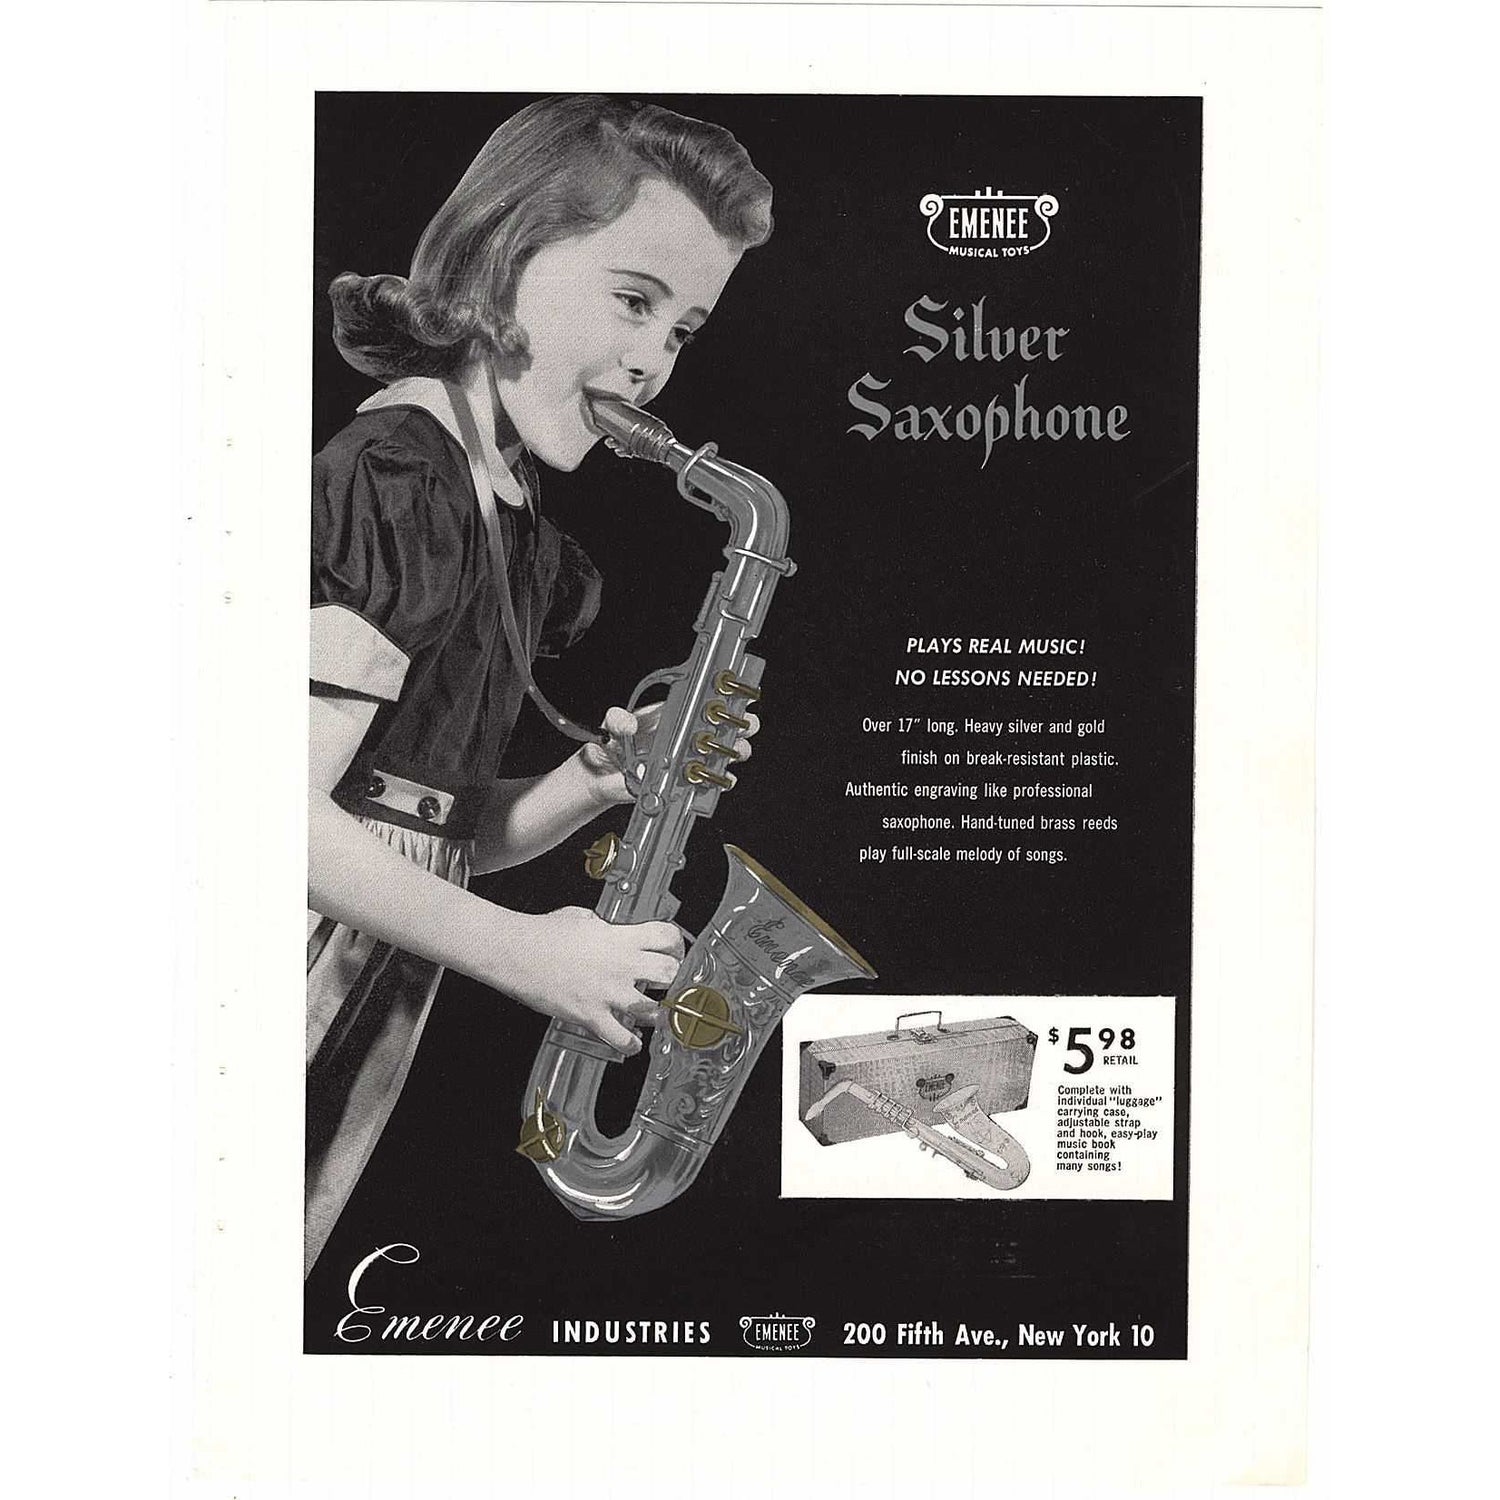 Image 1 of Emenee Ukulele Trade Advertisement (1950's) - SKU# 300U-2240 : Product Type Media : Elderly Instruments